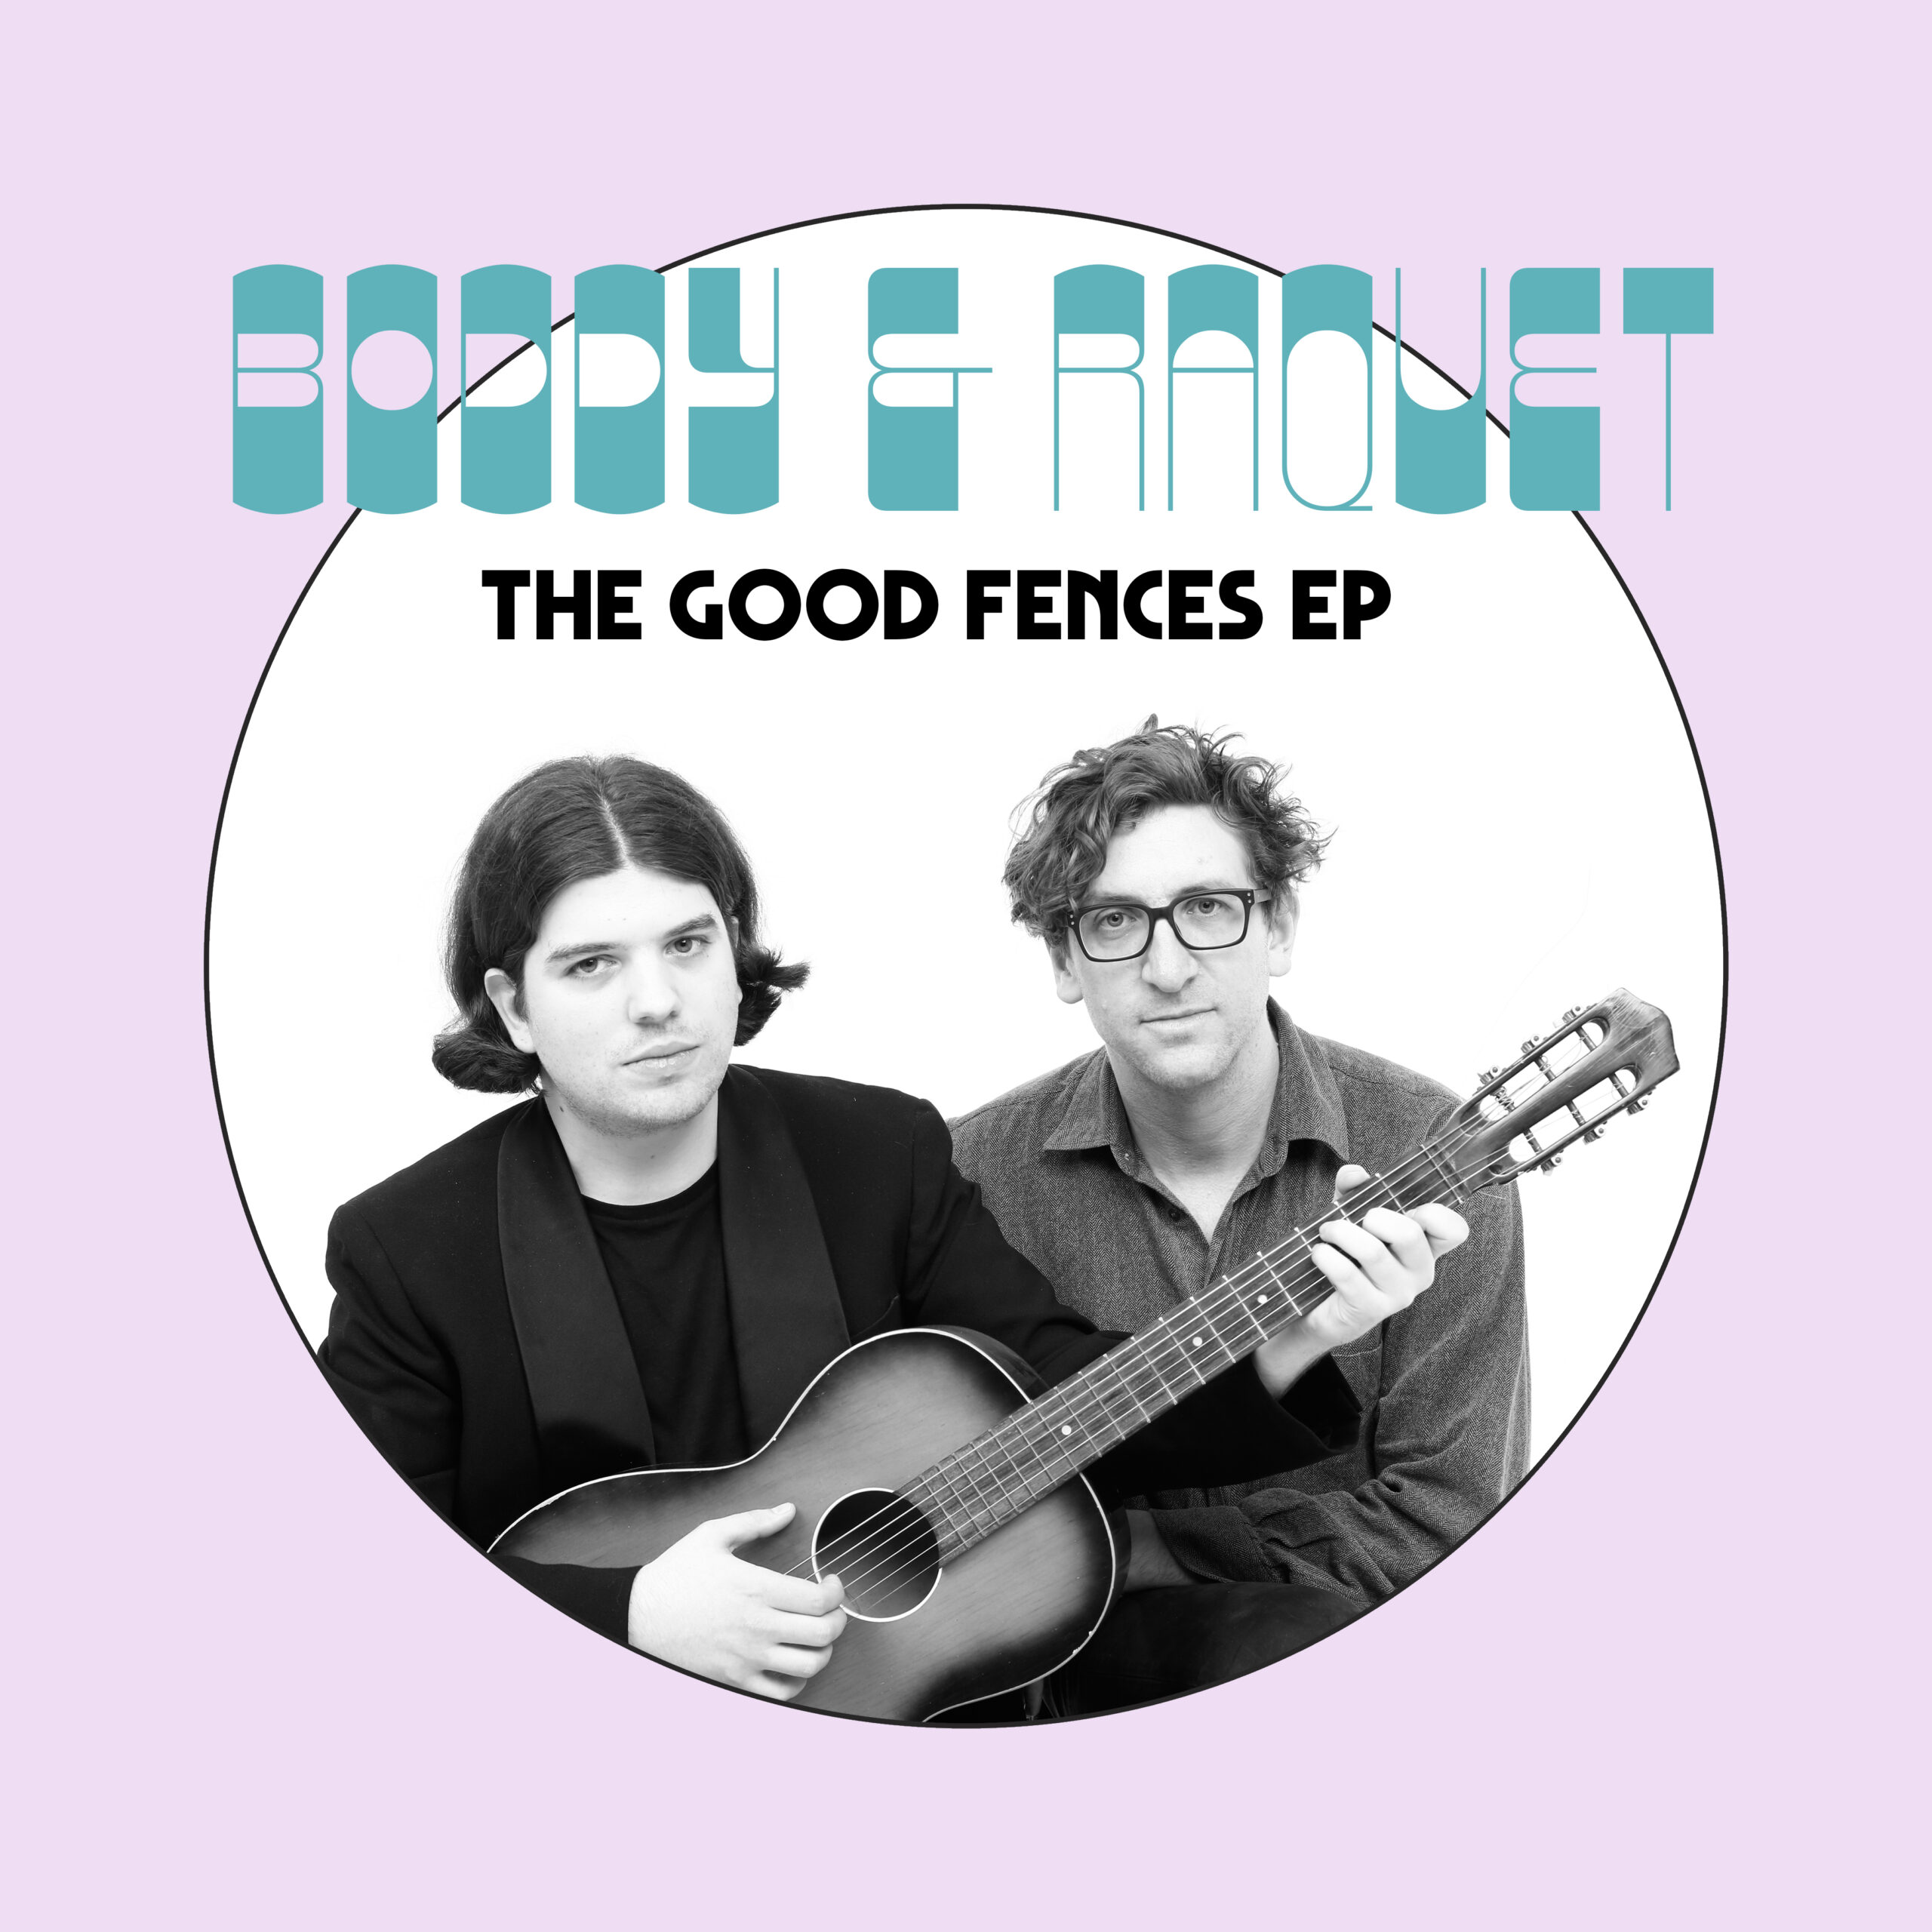 The Good Fences EP